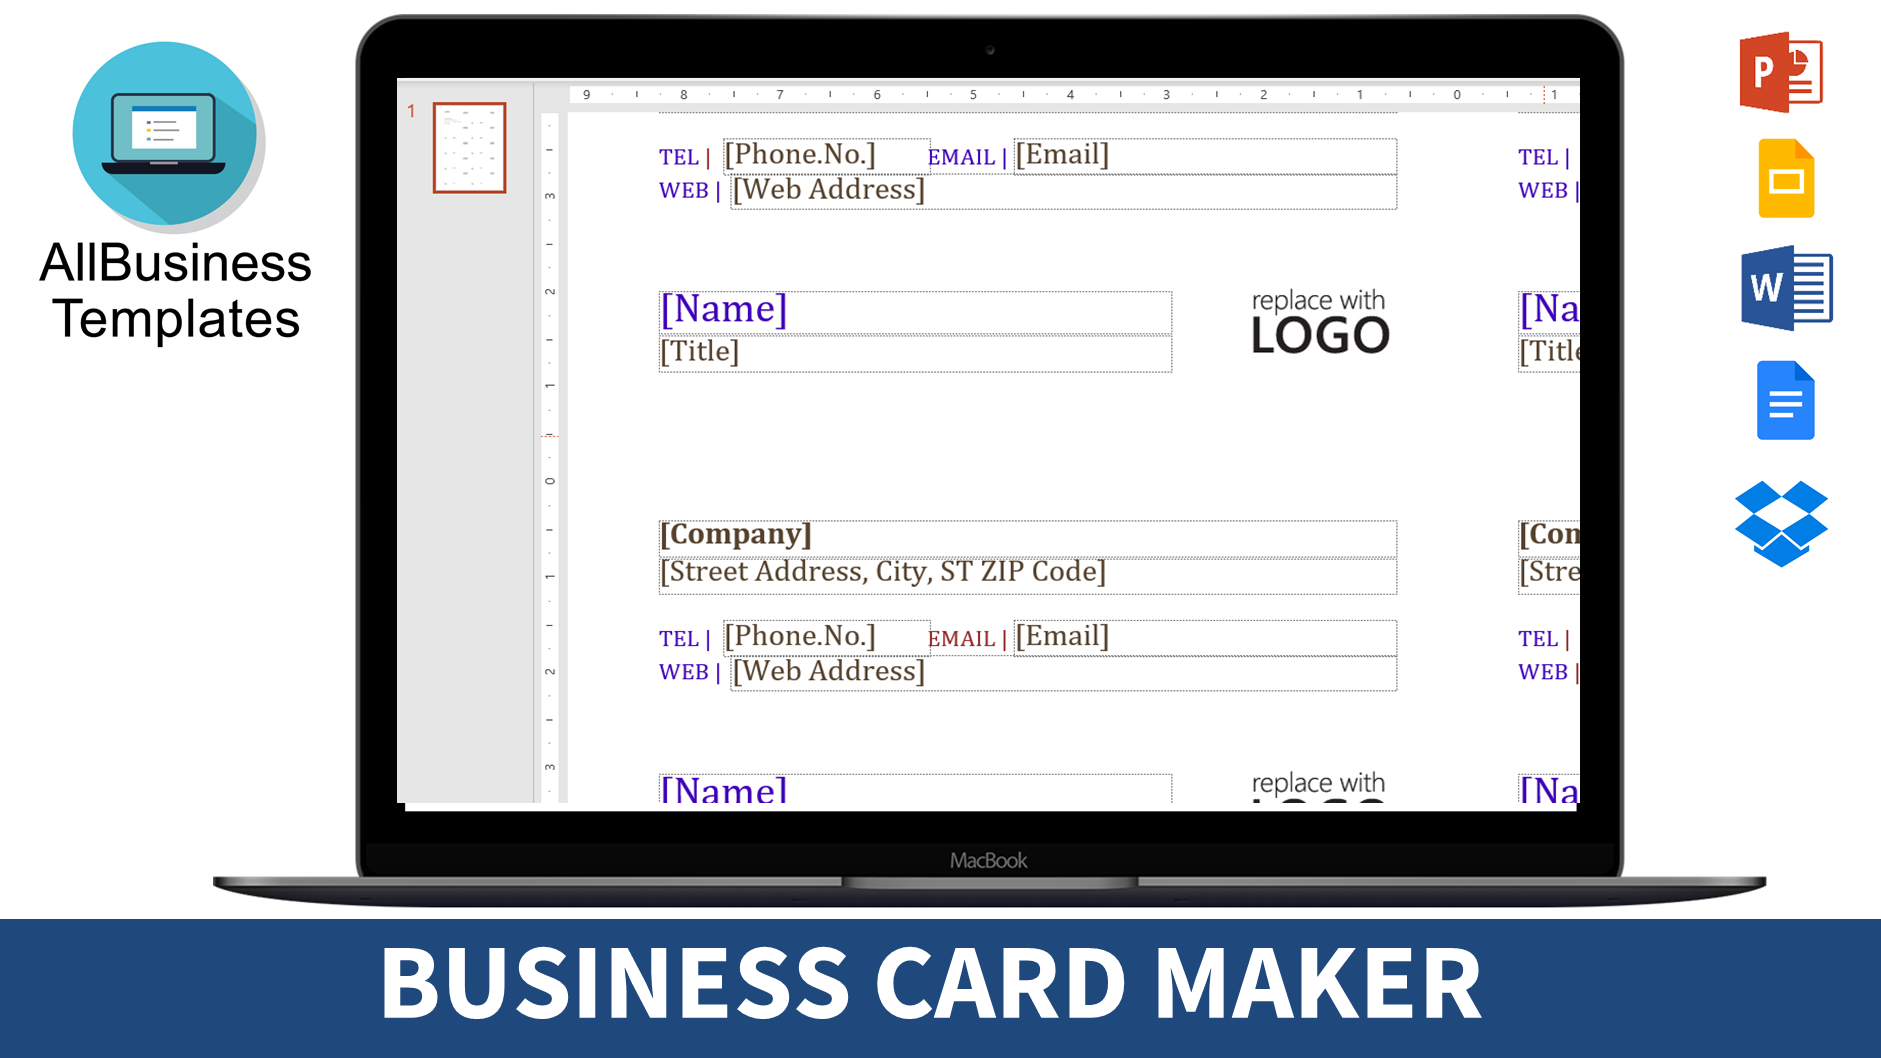 Custom Business Cards main image